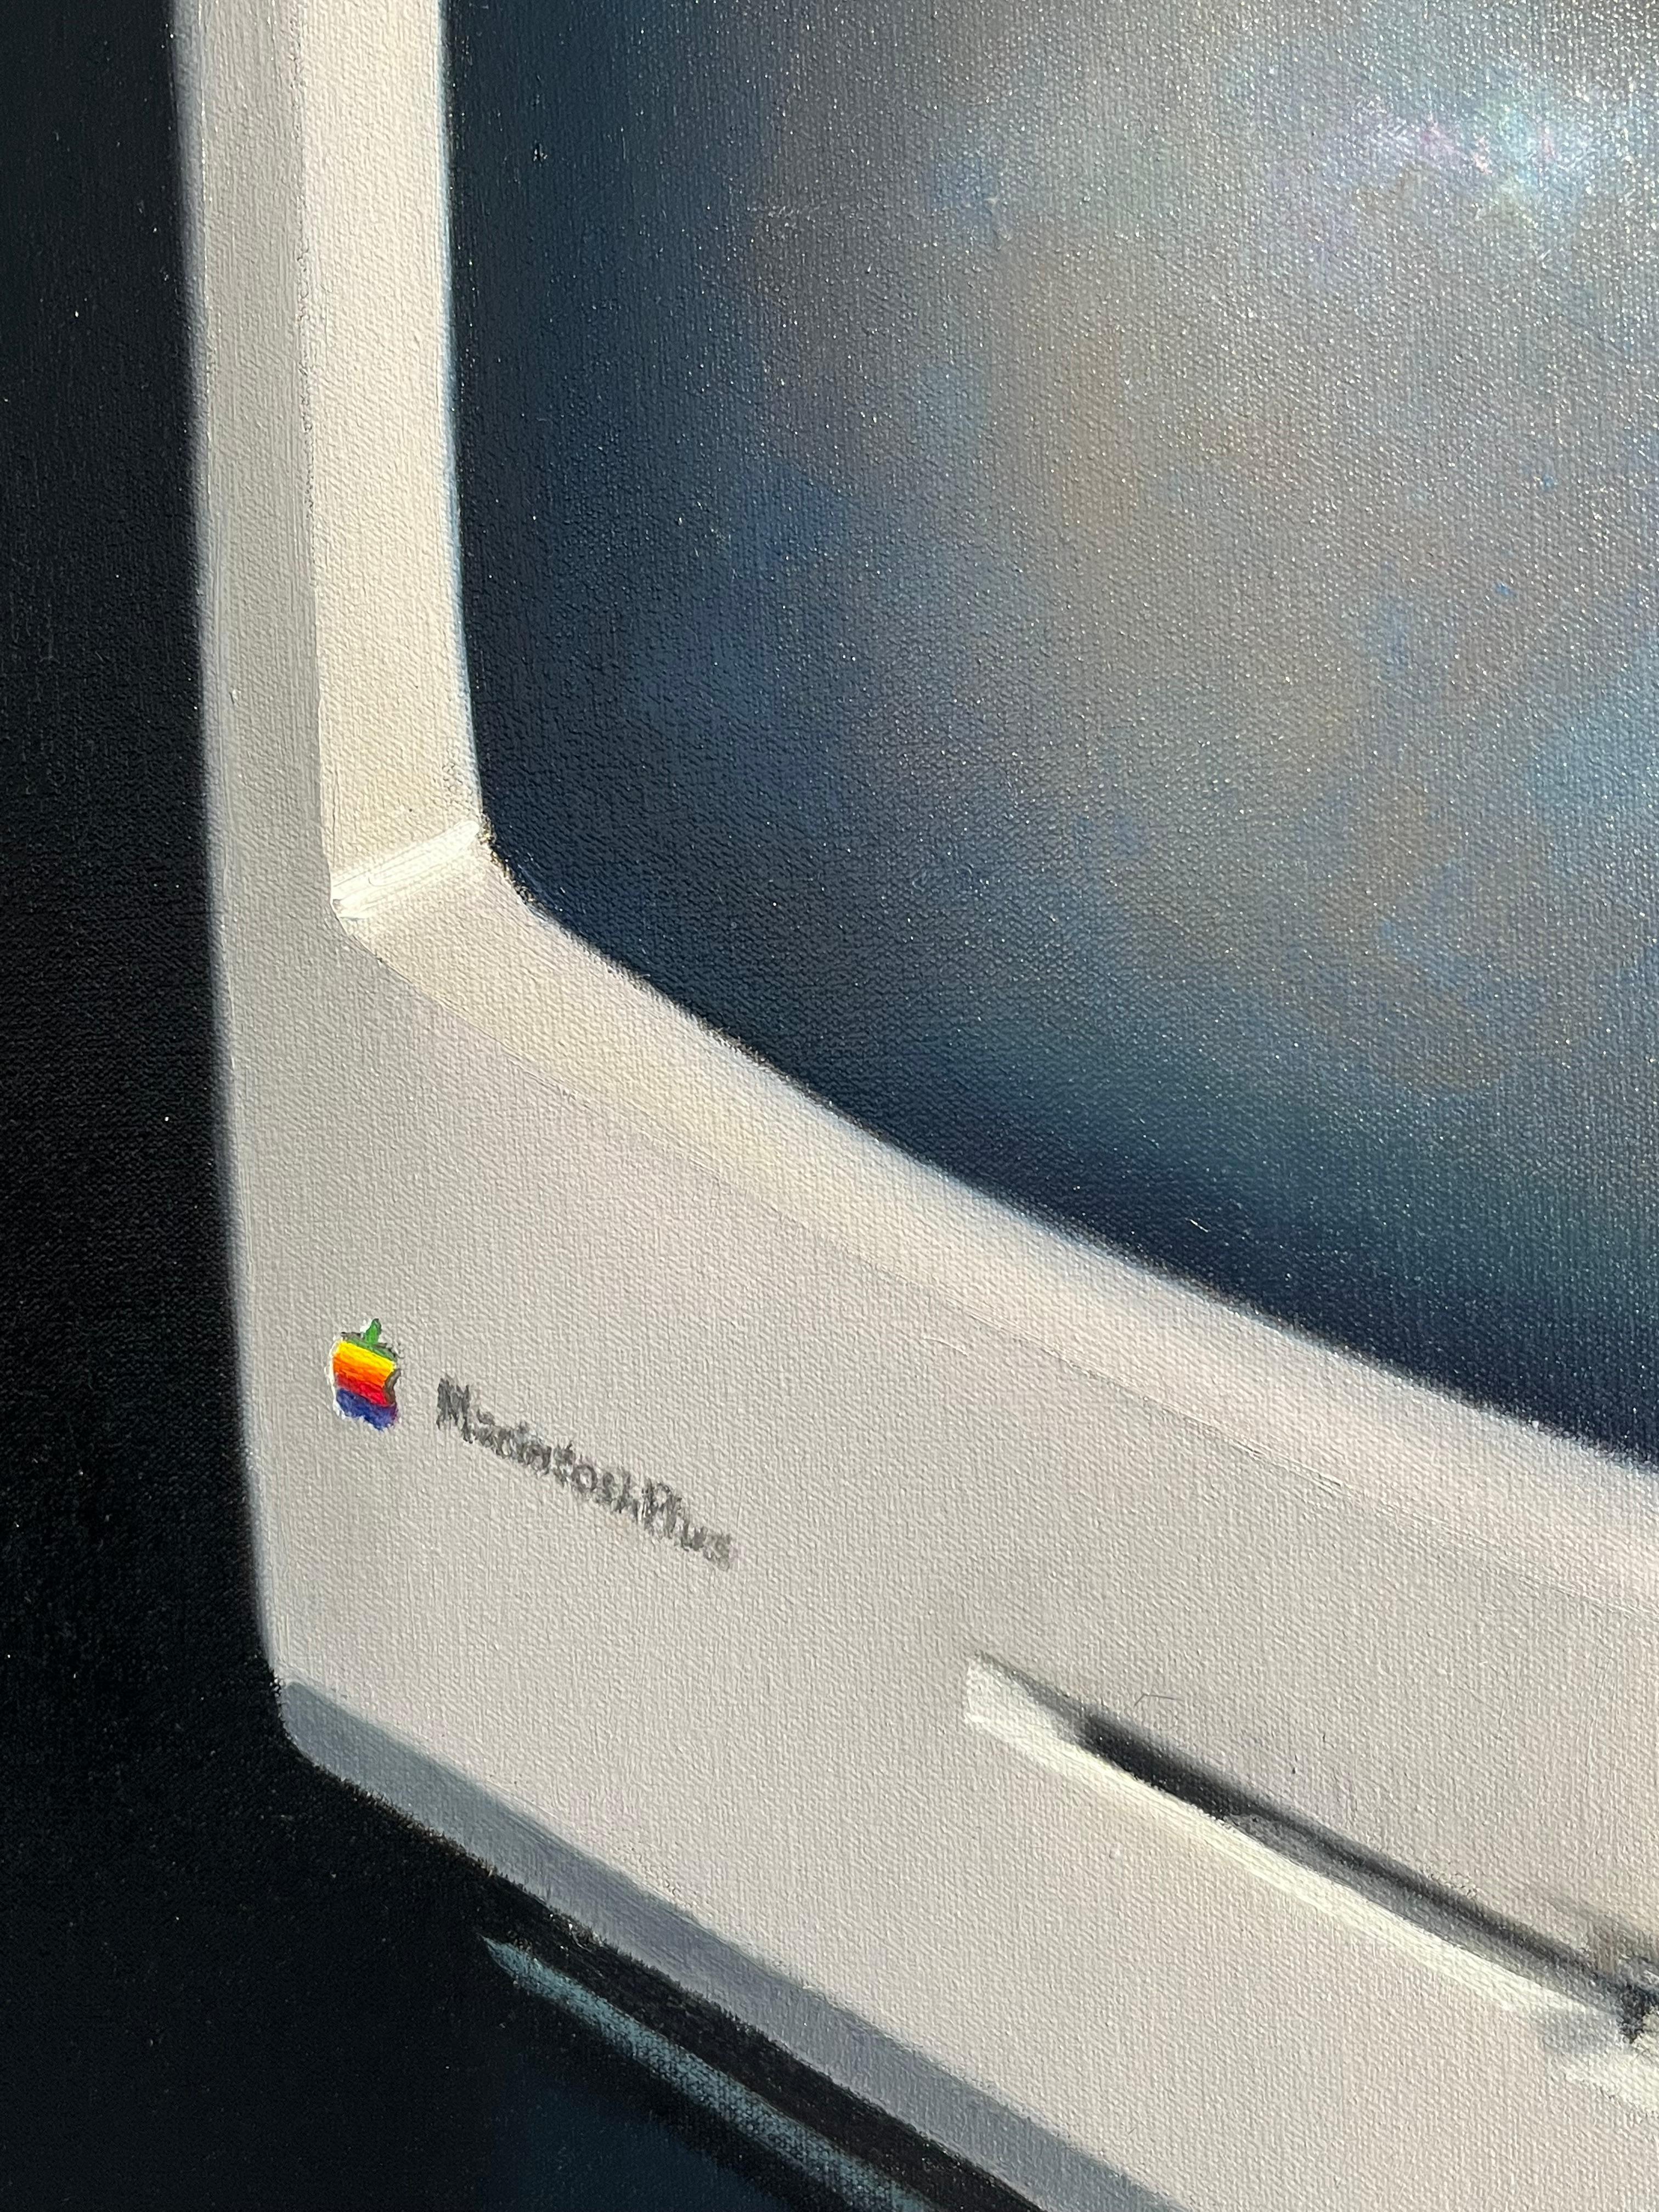 Macintosh-original modern impressionism still life oil painting-contemporary Art - American Realist Painting by James Zamora